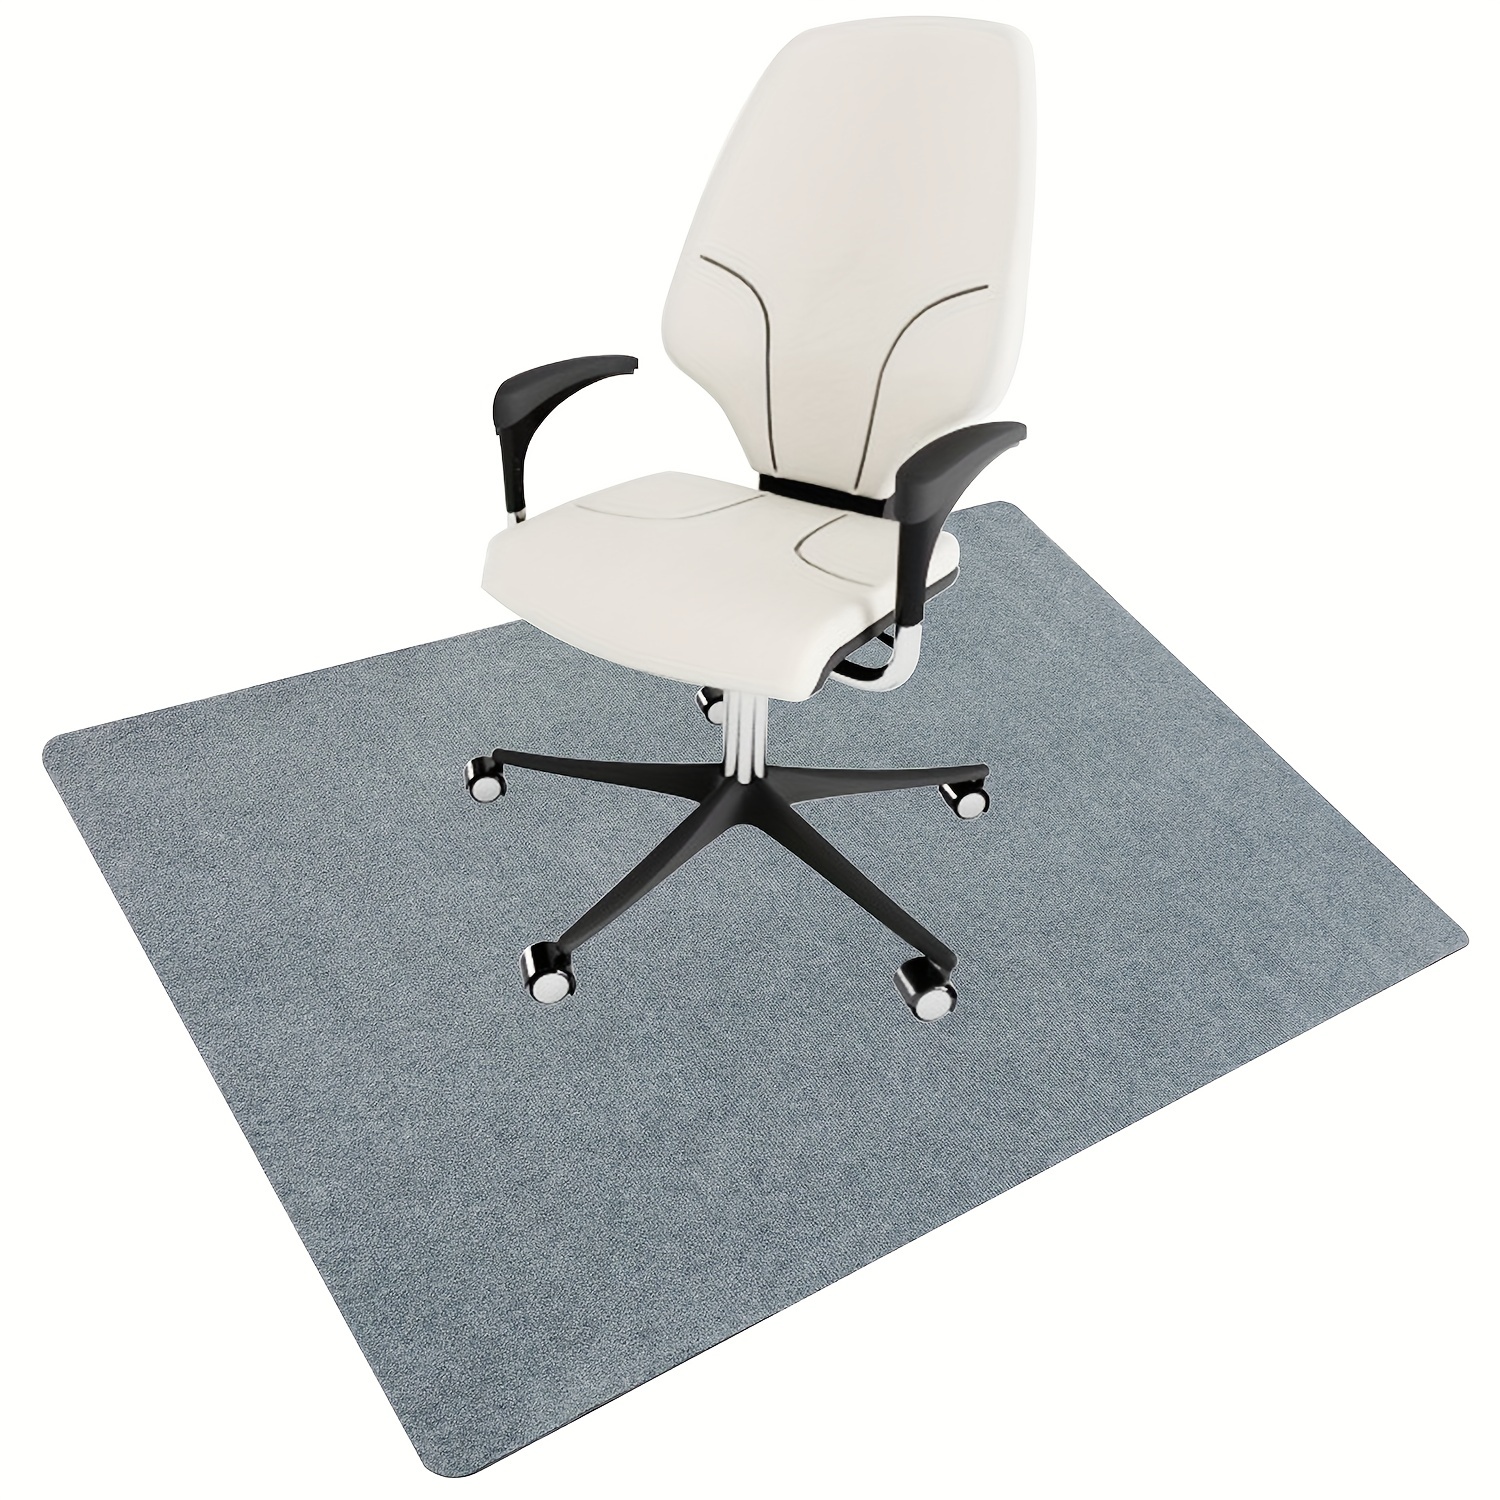 18%off Non Slip Custom Print Floor Protection Mat Office Chair